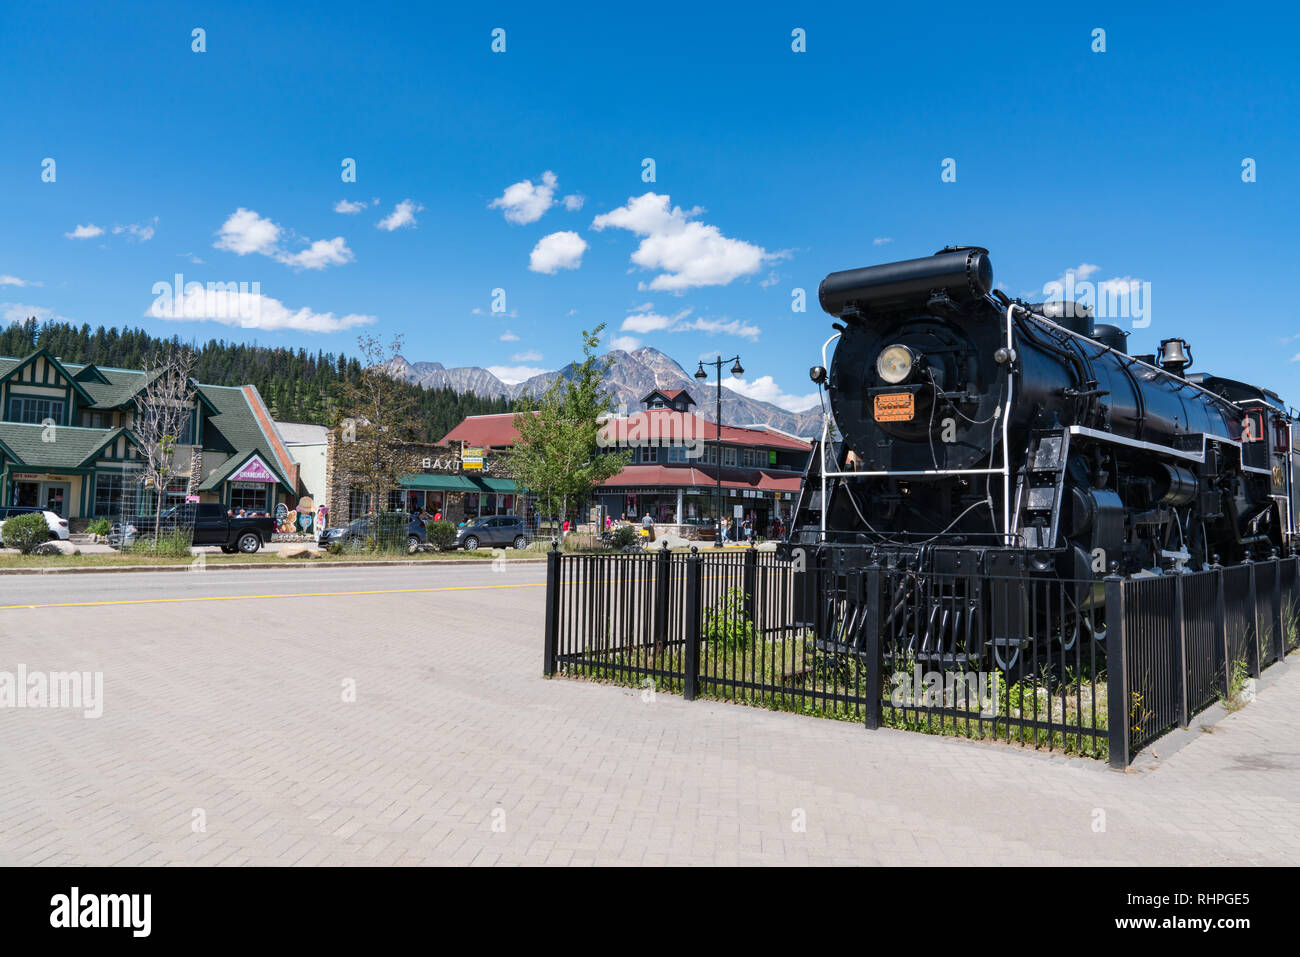 JASPER, CANADA - JULY 5, 2018: Old Canadian National Railroad locomotive in downtown Jasper, Alberta along Connaught Drive. Stock Photo